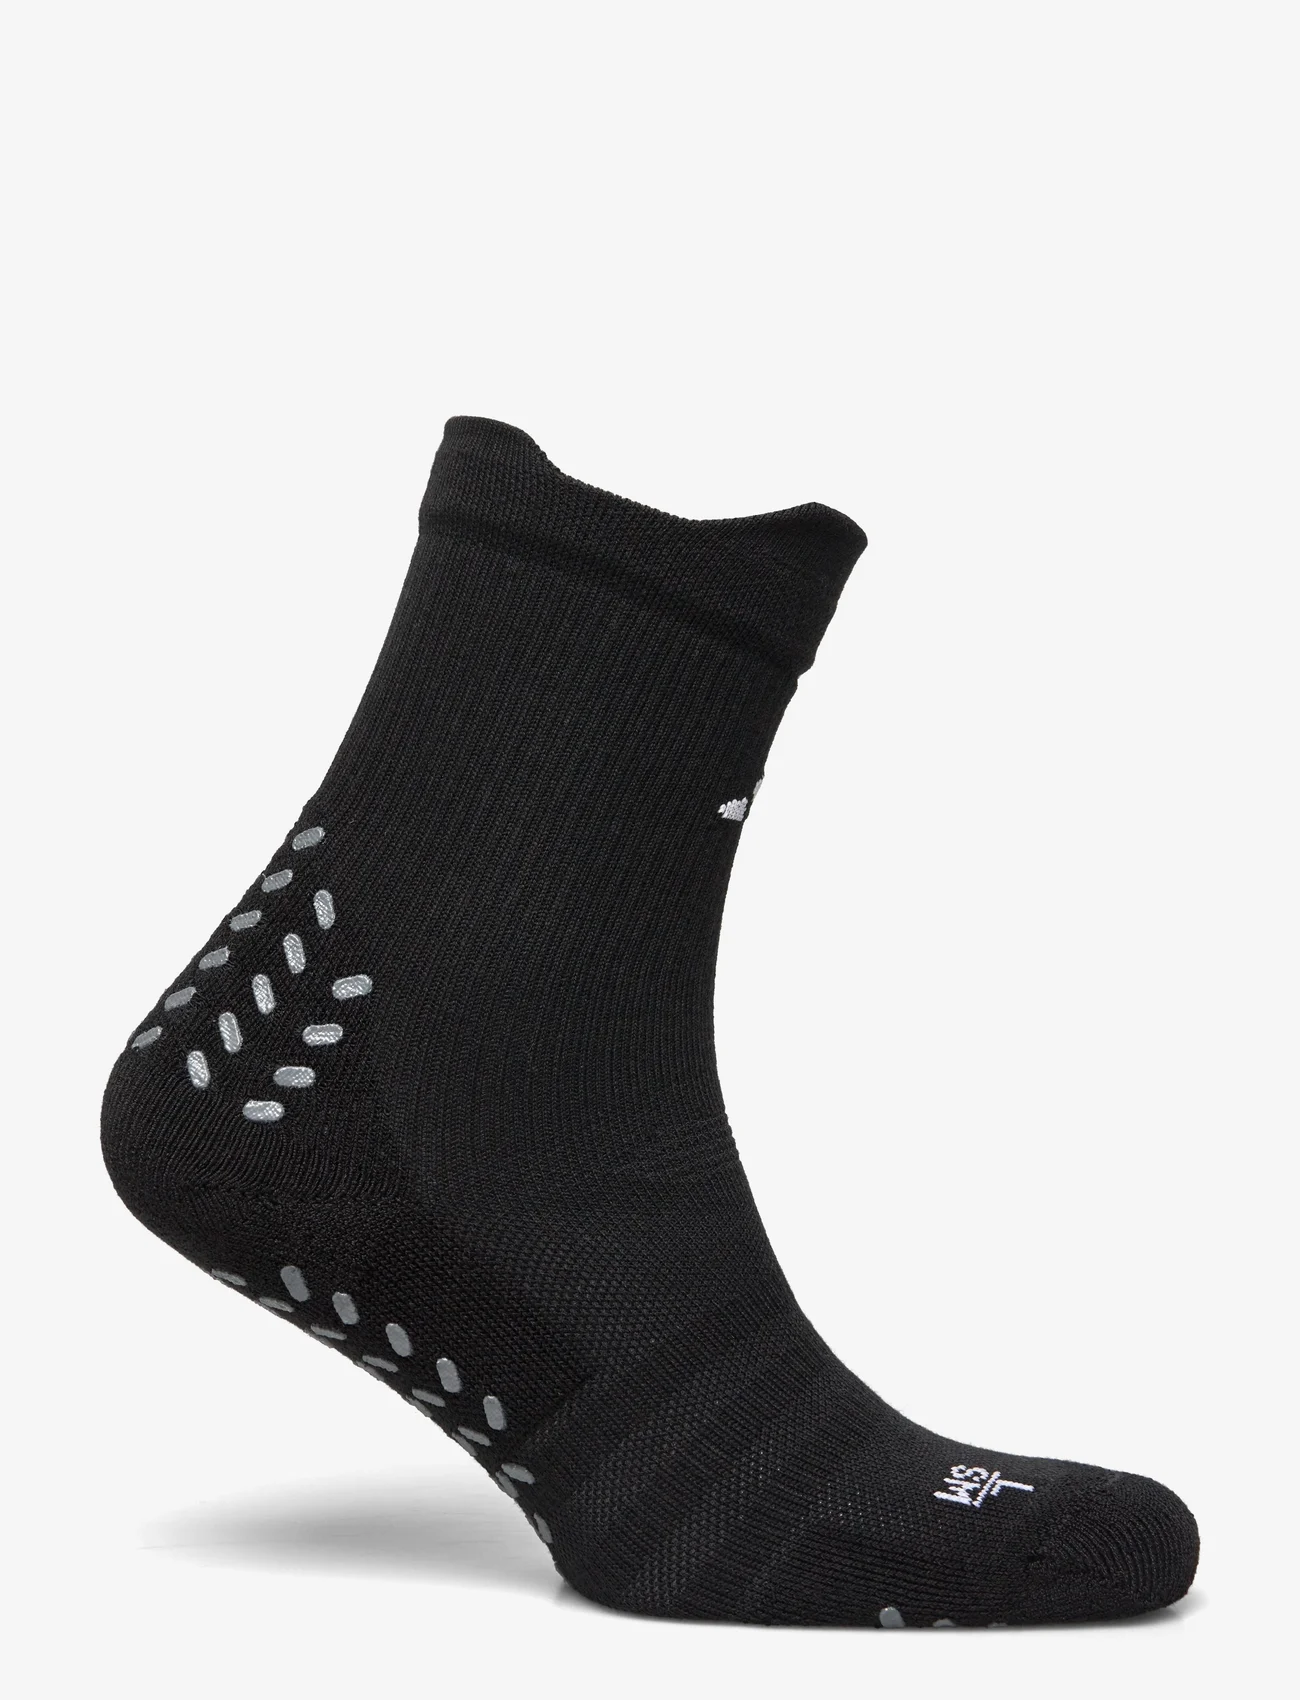 adidas Performance - Adidas Football GRIP Printed Crew Performance Socks Cushioned - lowest prices - black/white - 1